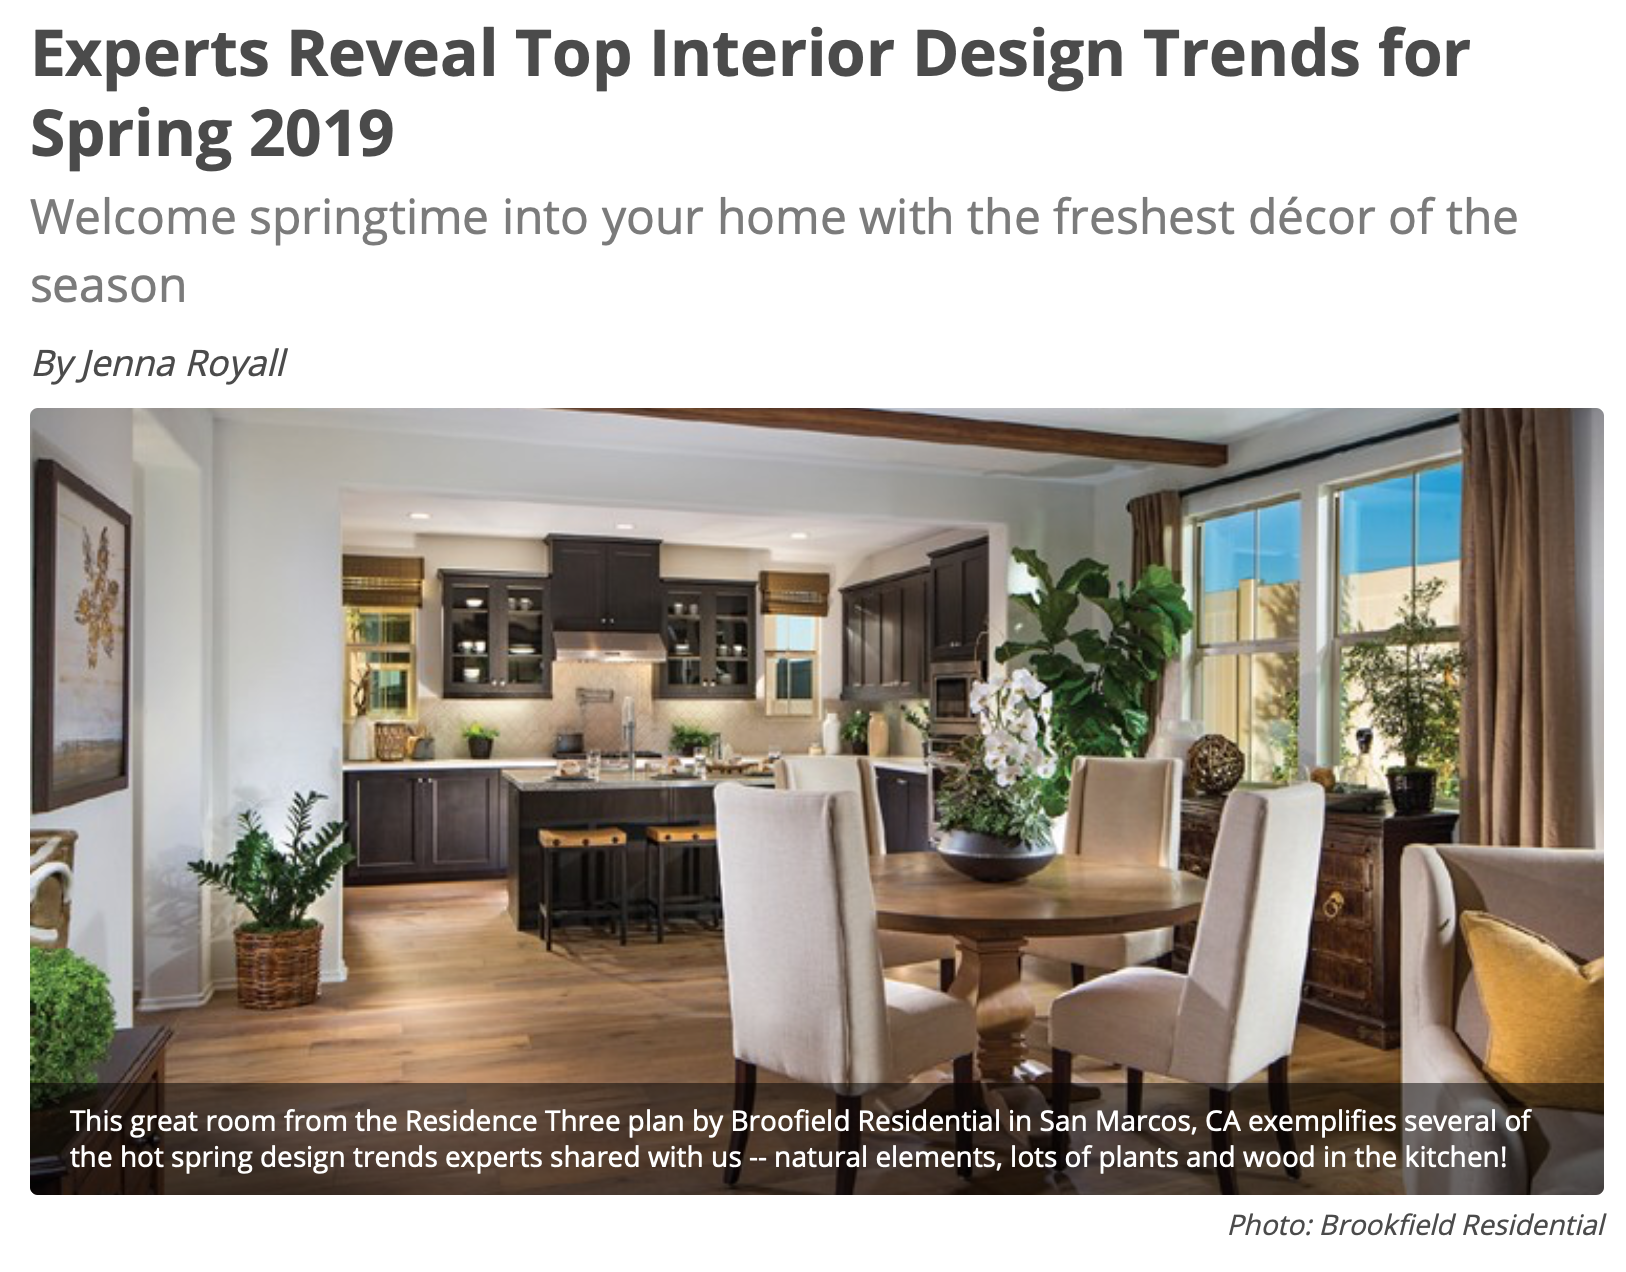 lori dennis design expert reveals top interior trends for spring